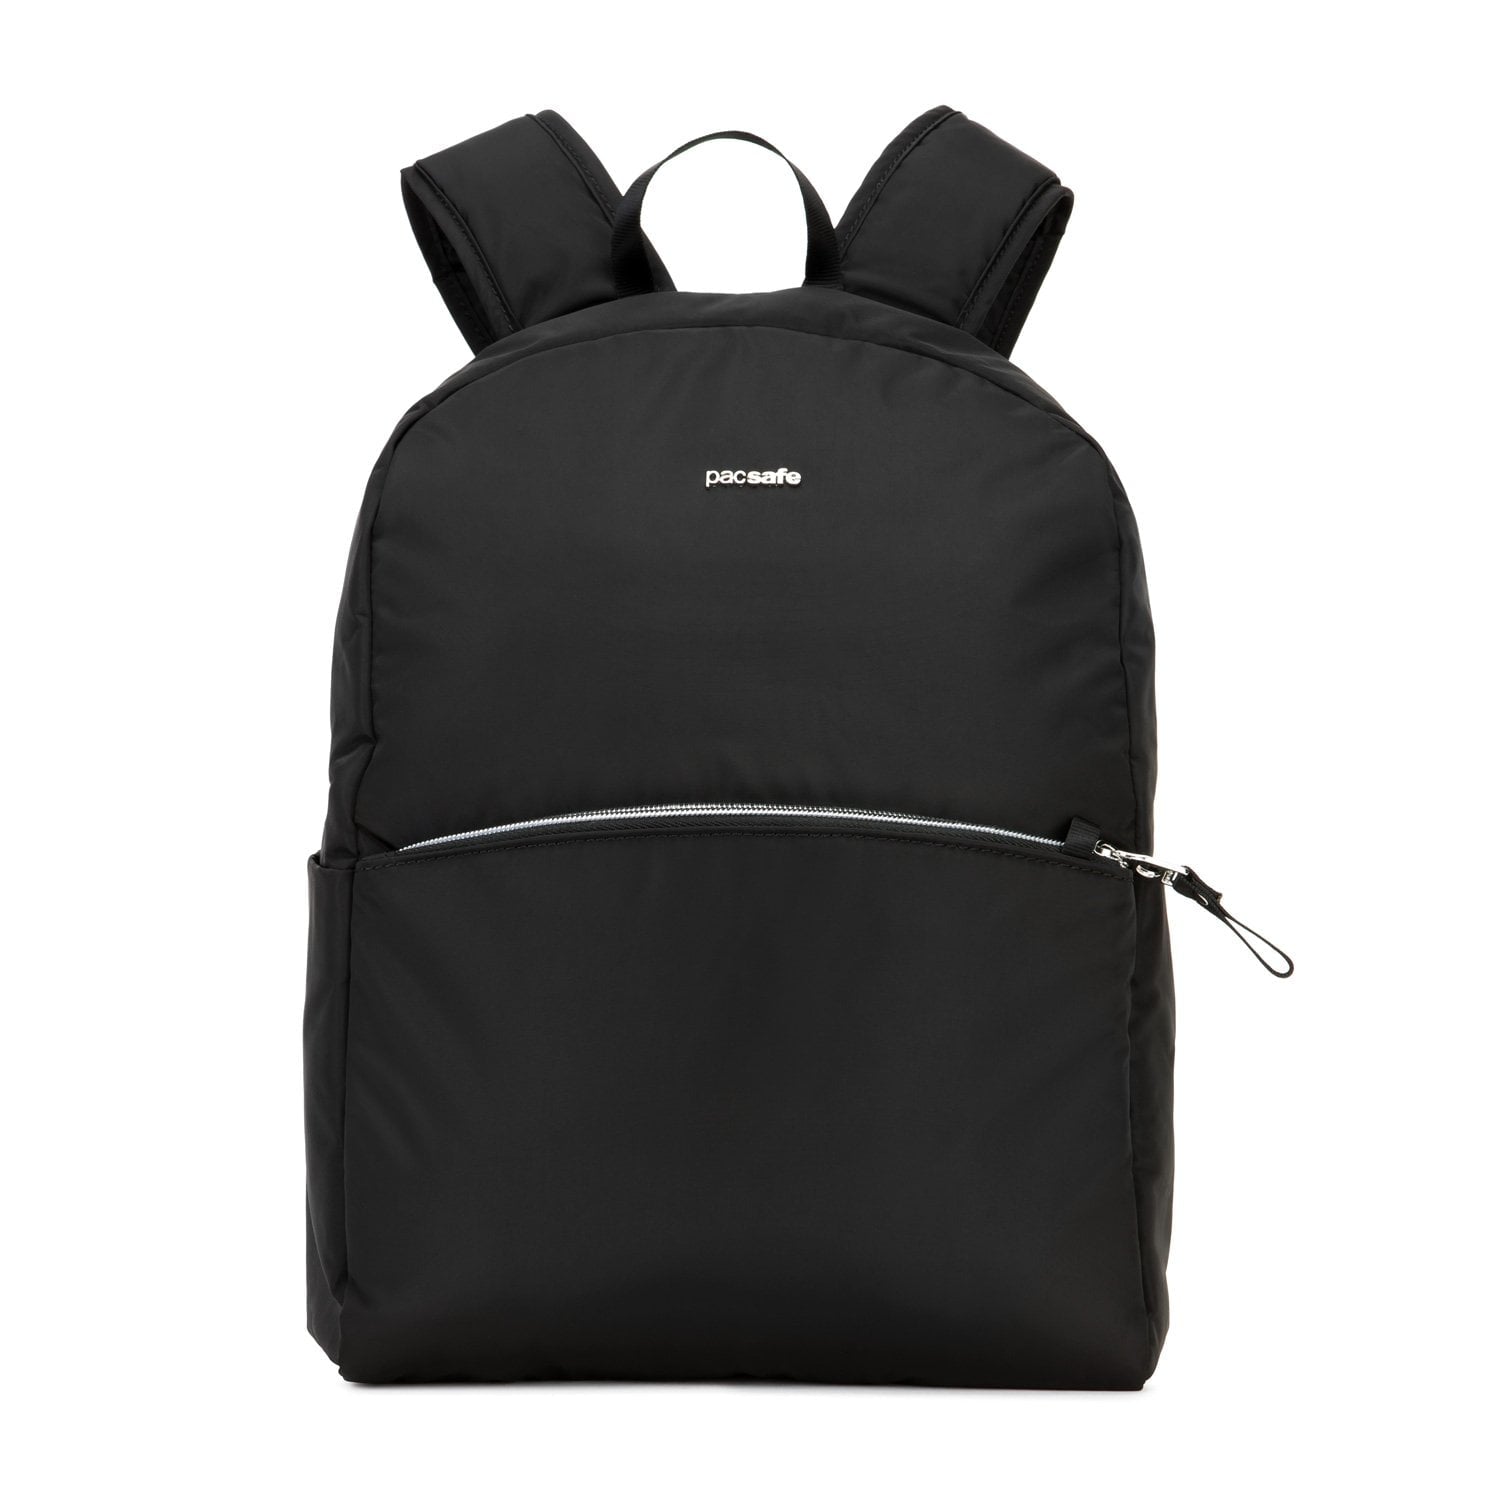 Pacsafe Stylesafe Anti-Theft Backpack - Black